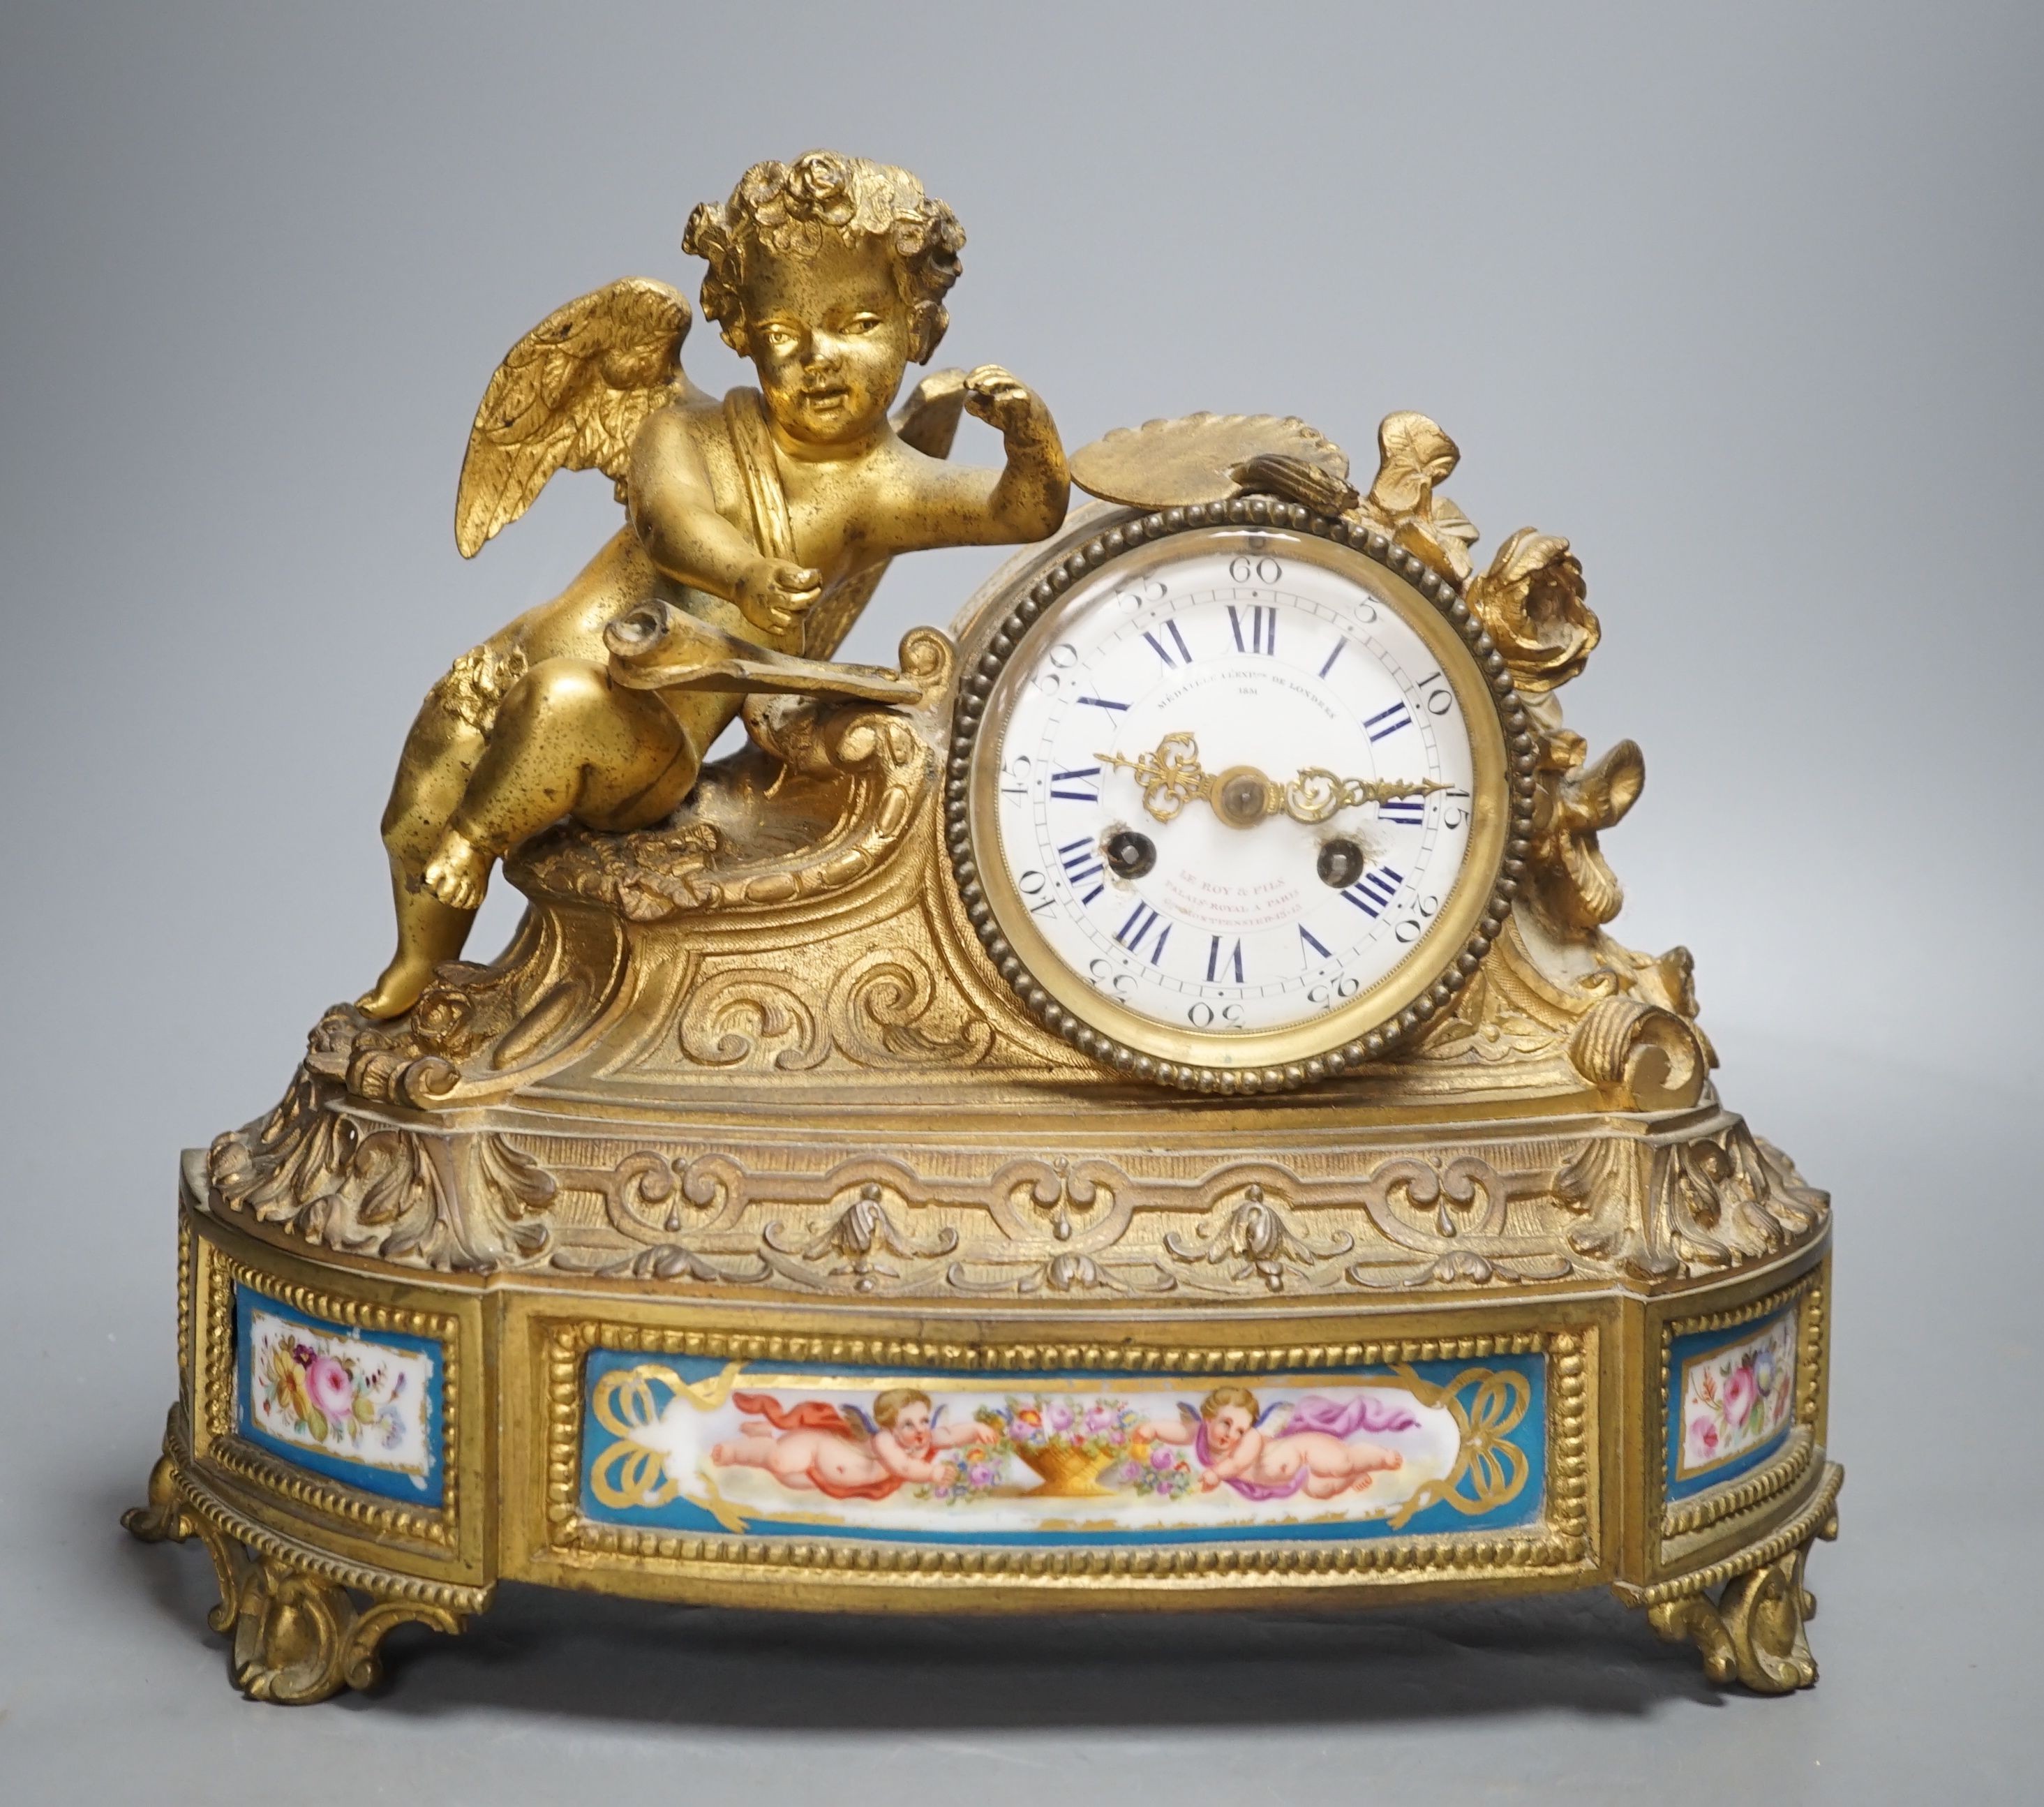 A French ormolu and Sevres style porcelain mounted putti mantel clock by Le Roy et Fils, Palais Royale, Paris, 26 cms high.